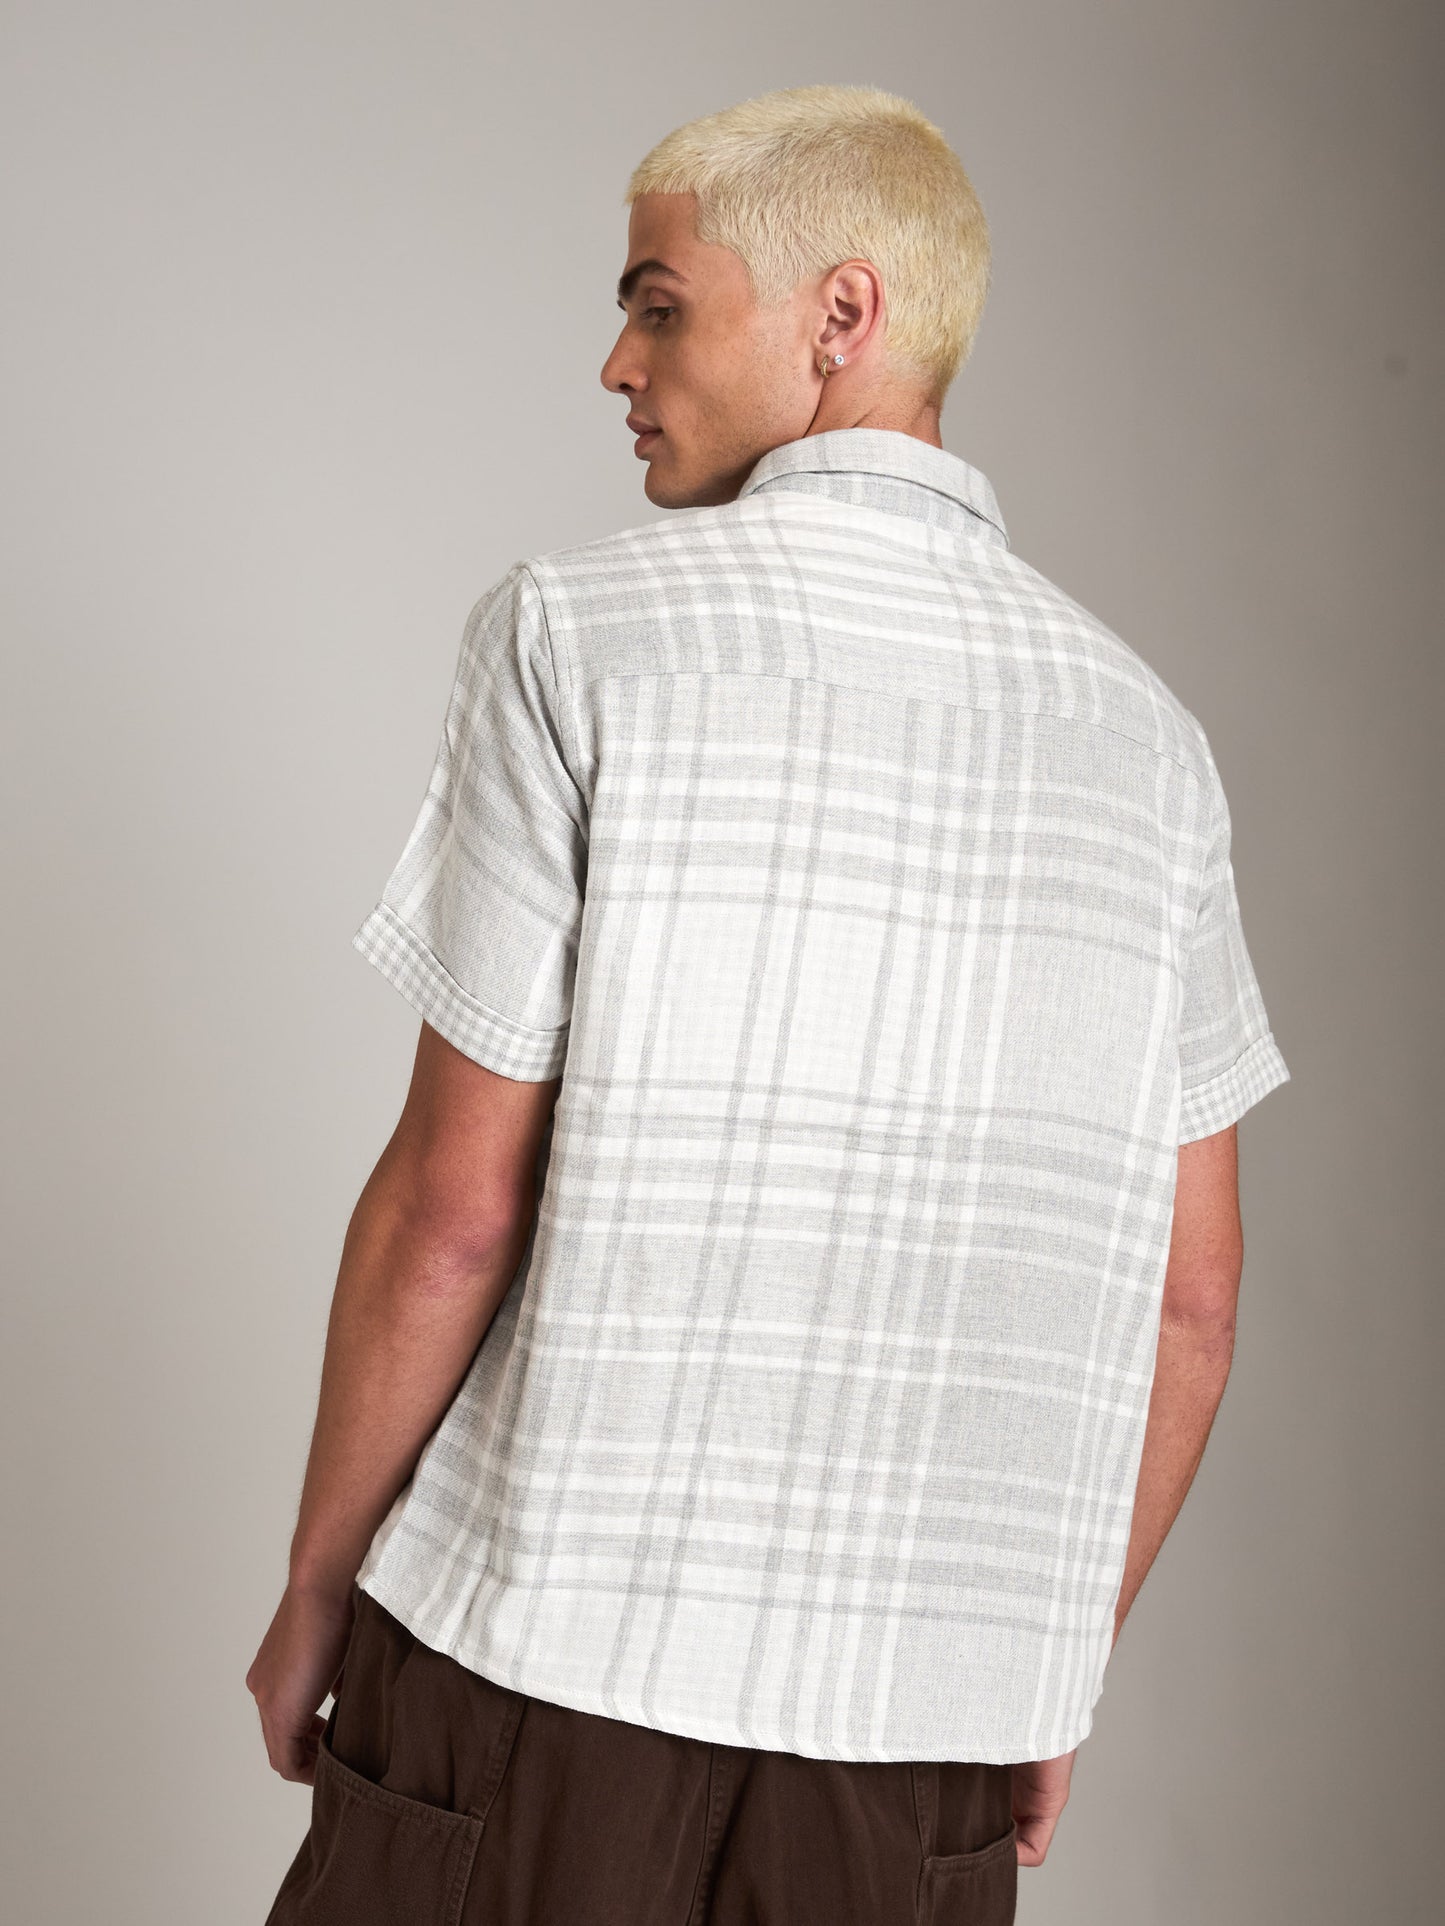 m tops - HEDGE - Short Sleeve Plaid Shirt - PLENTY